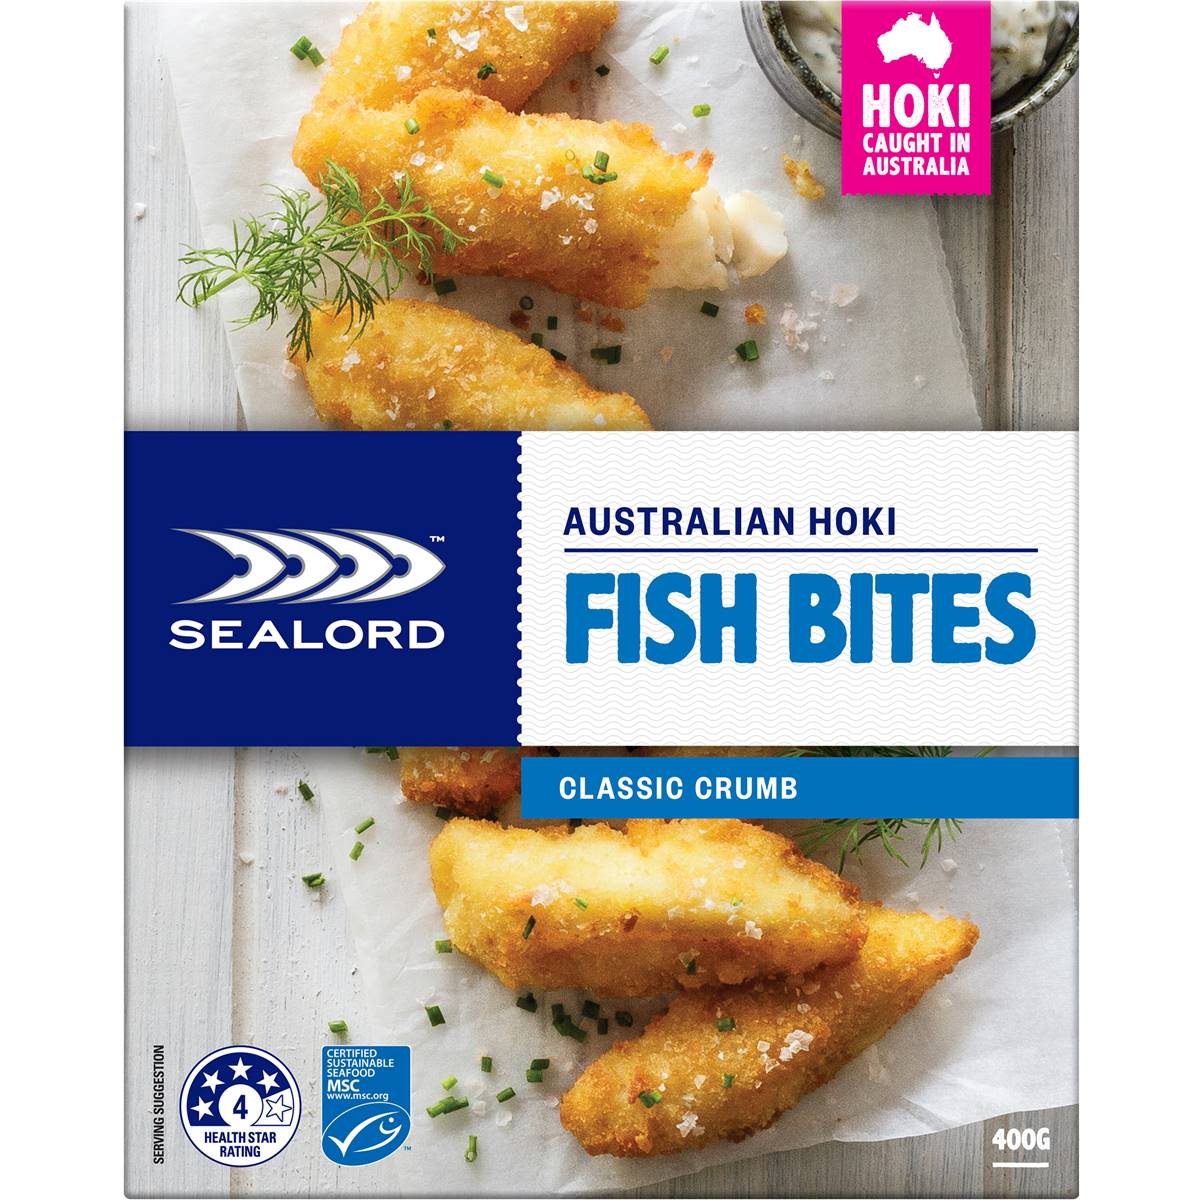 Calories in Sealord Australian Hoki Fish Bites Classic Crumb